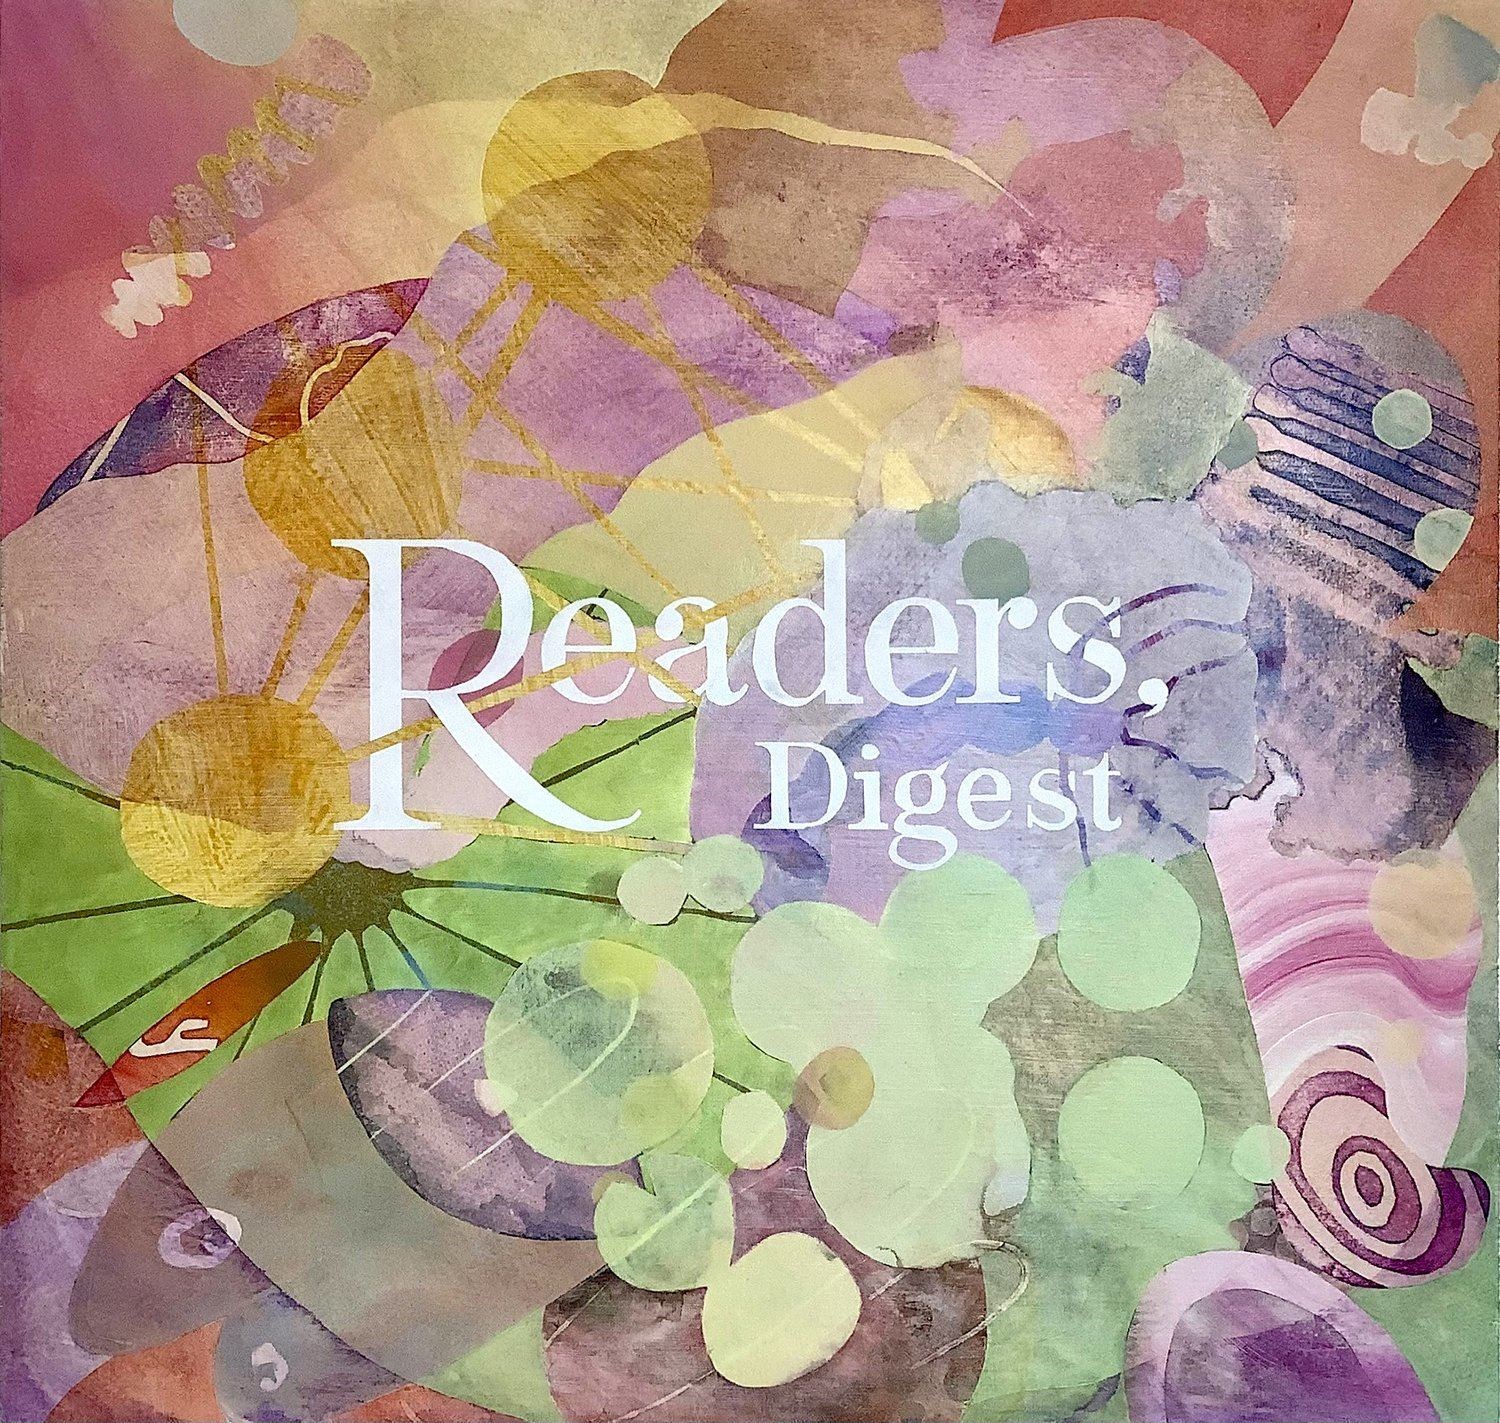 Karen Beattie's "Readers, Digest" artwork featured in the exhibition